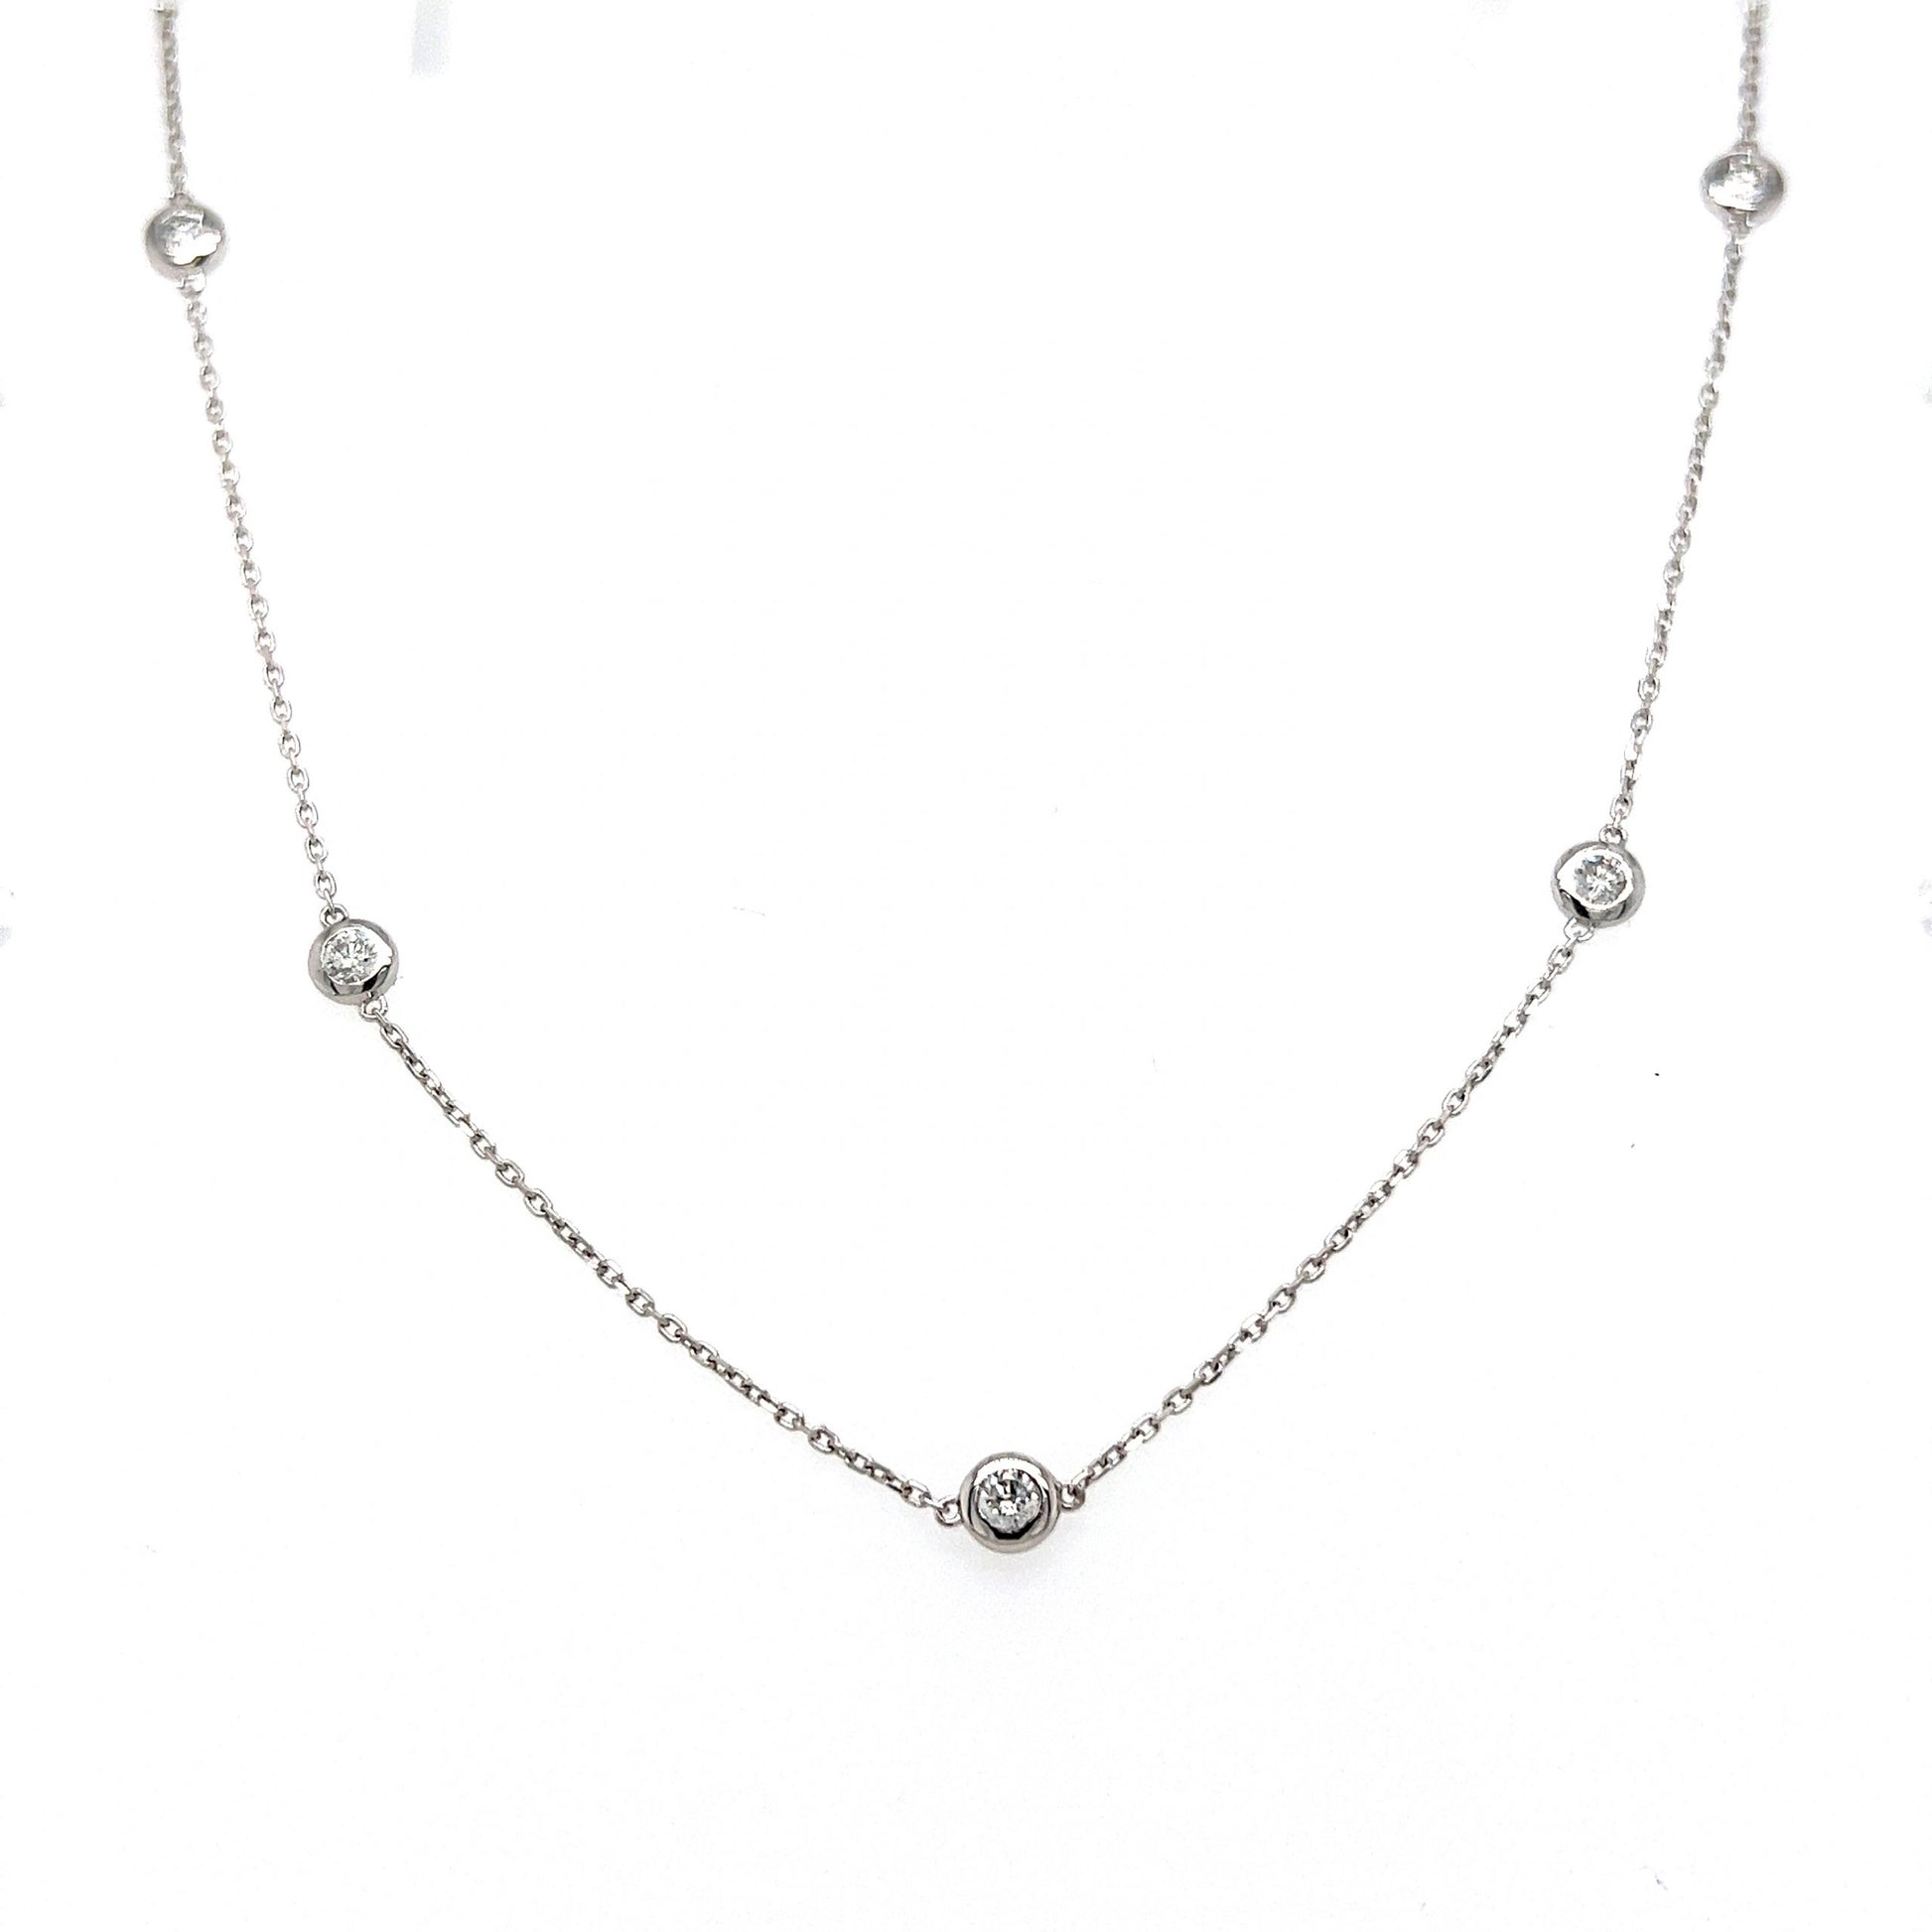 .77 Bezel Set Diamond Necklace in 14k White Gold